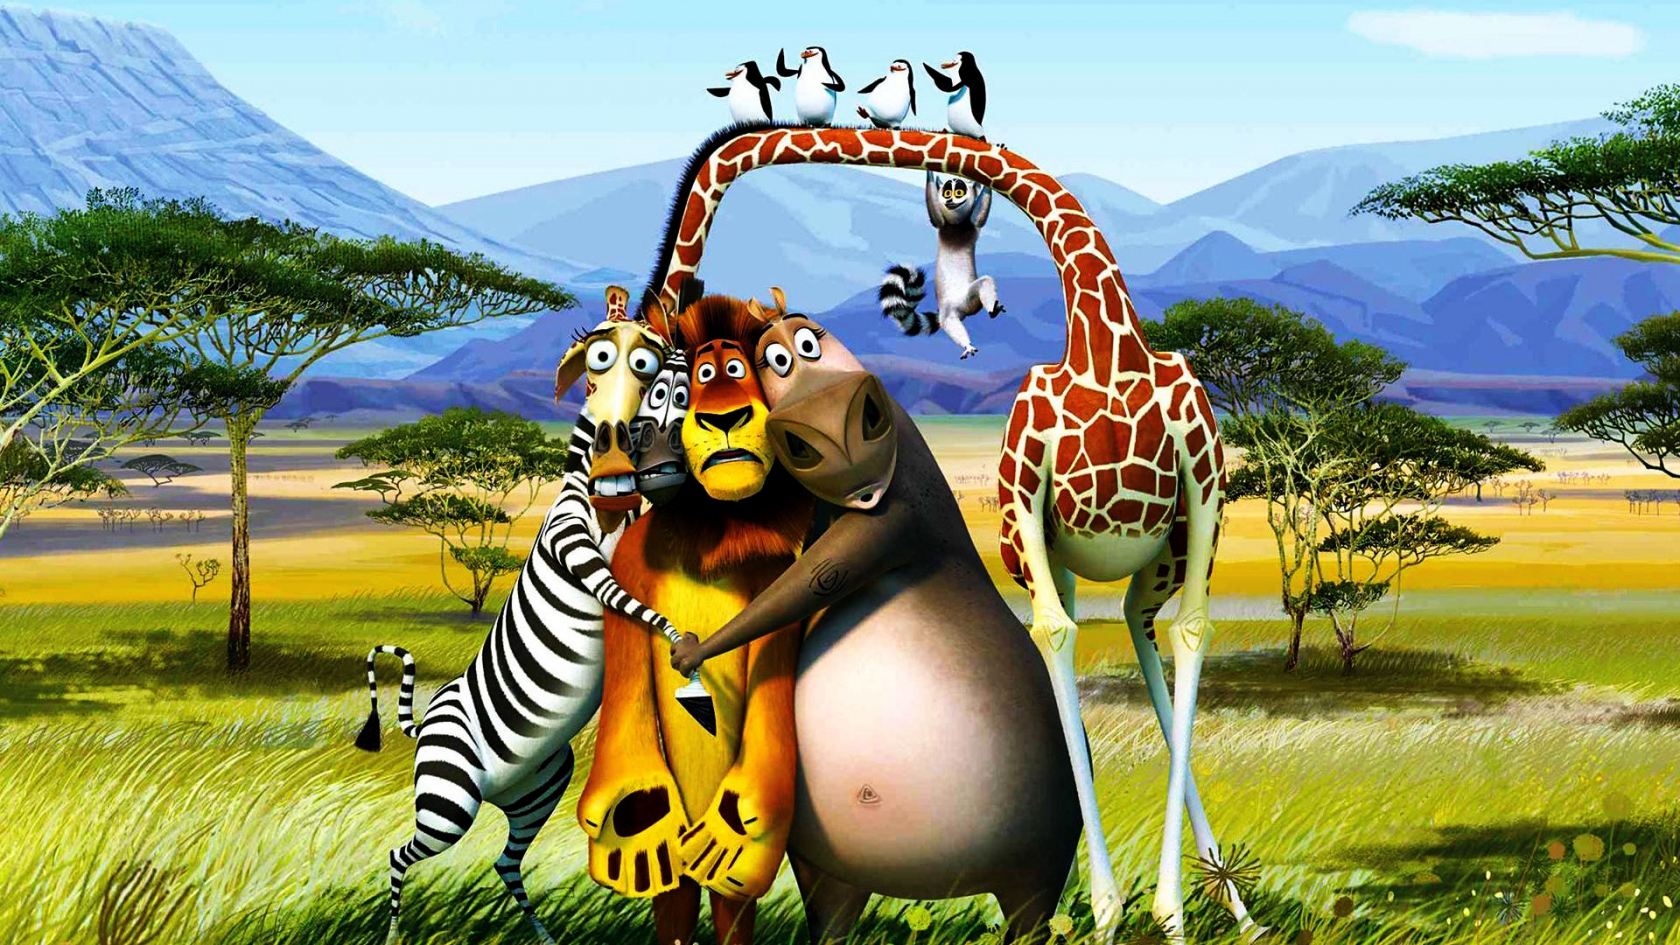 Madagascar 3 Poster for 1680 x 945 HDTV resolution